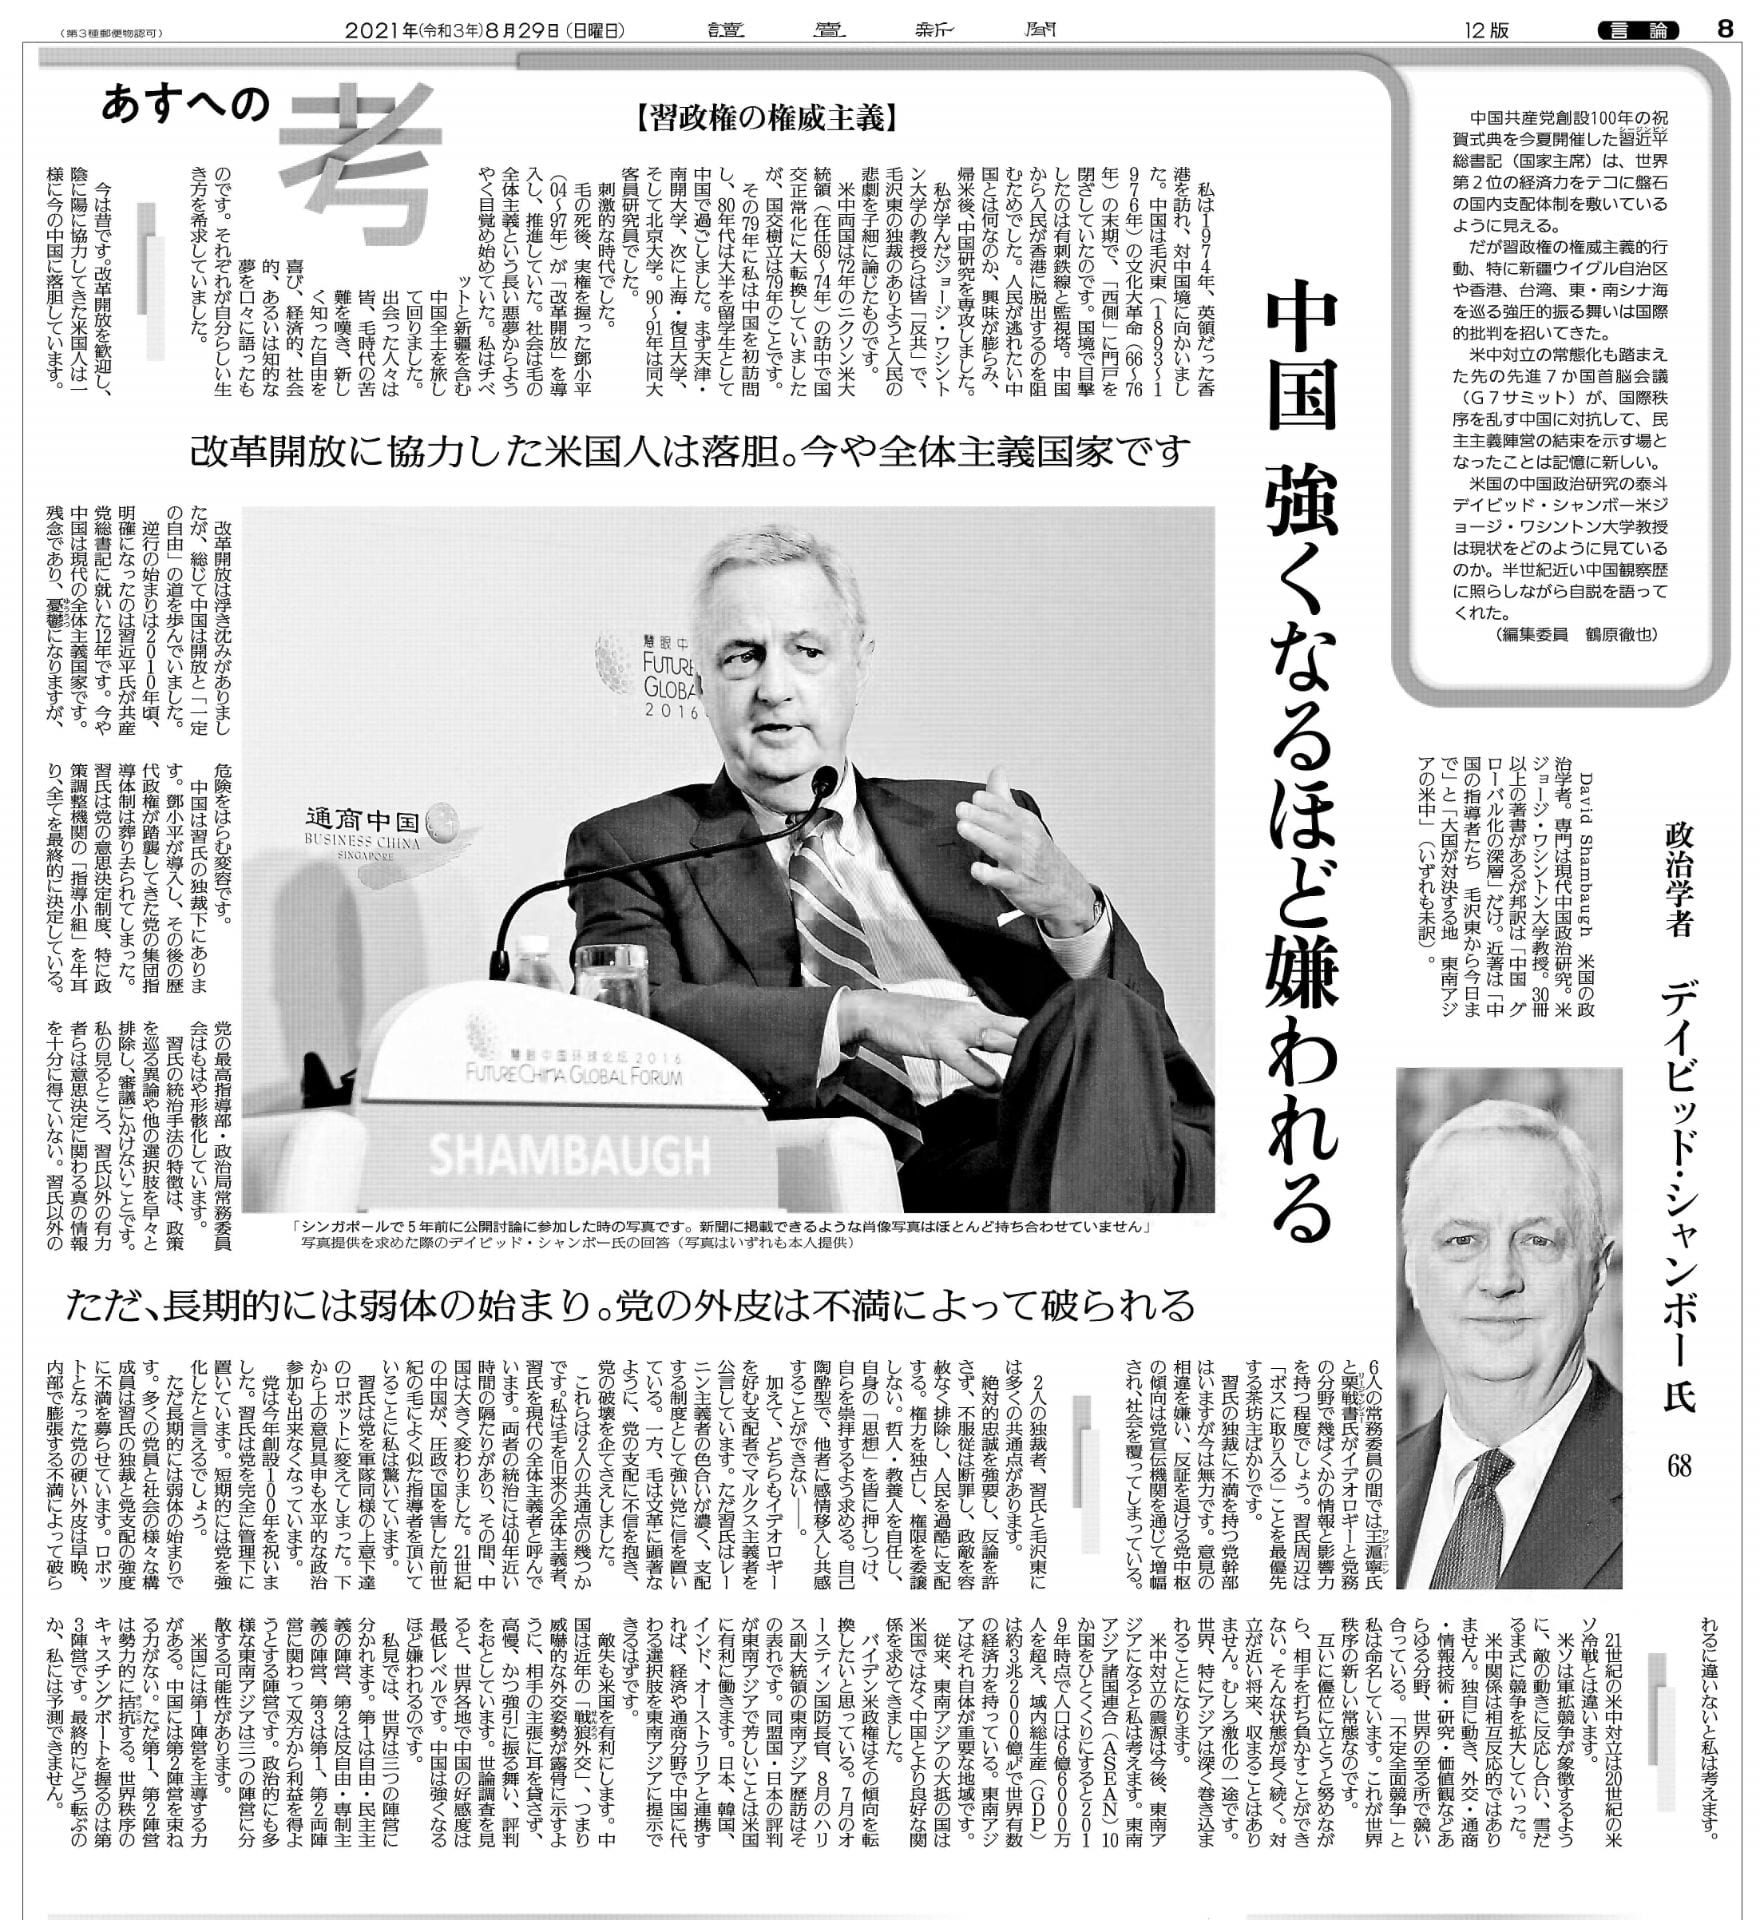 spread of a japanese newspaper featuring Professor David Shambaugh